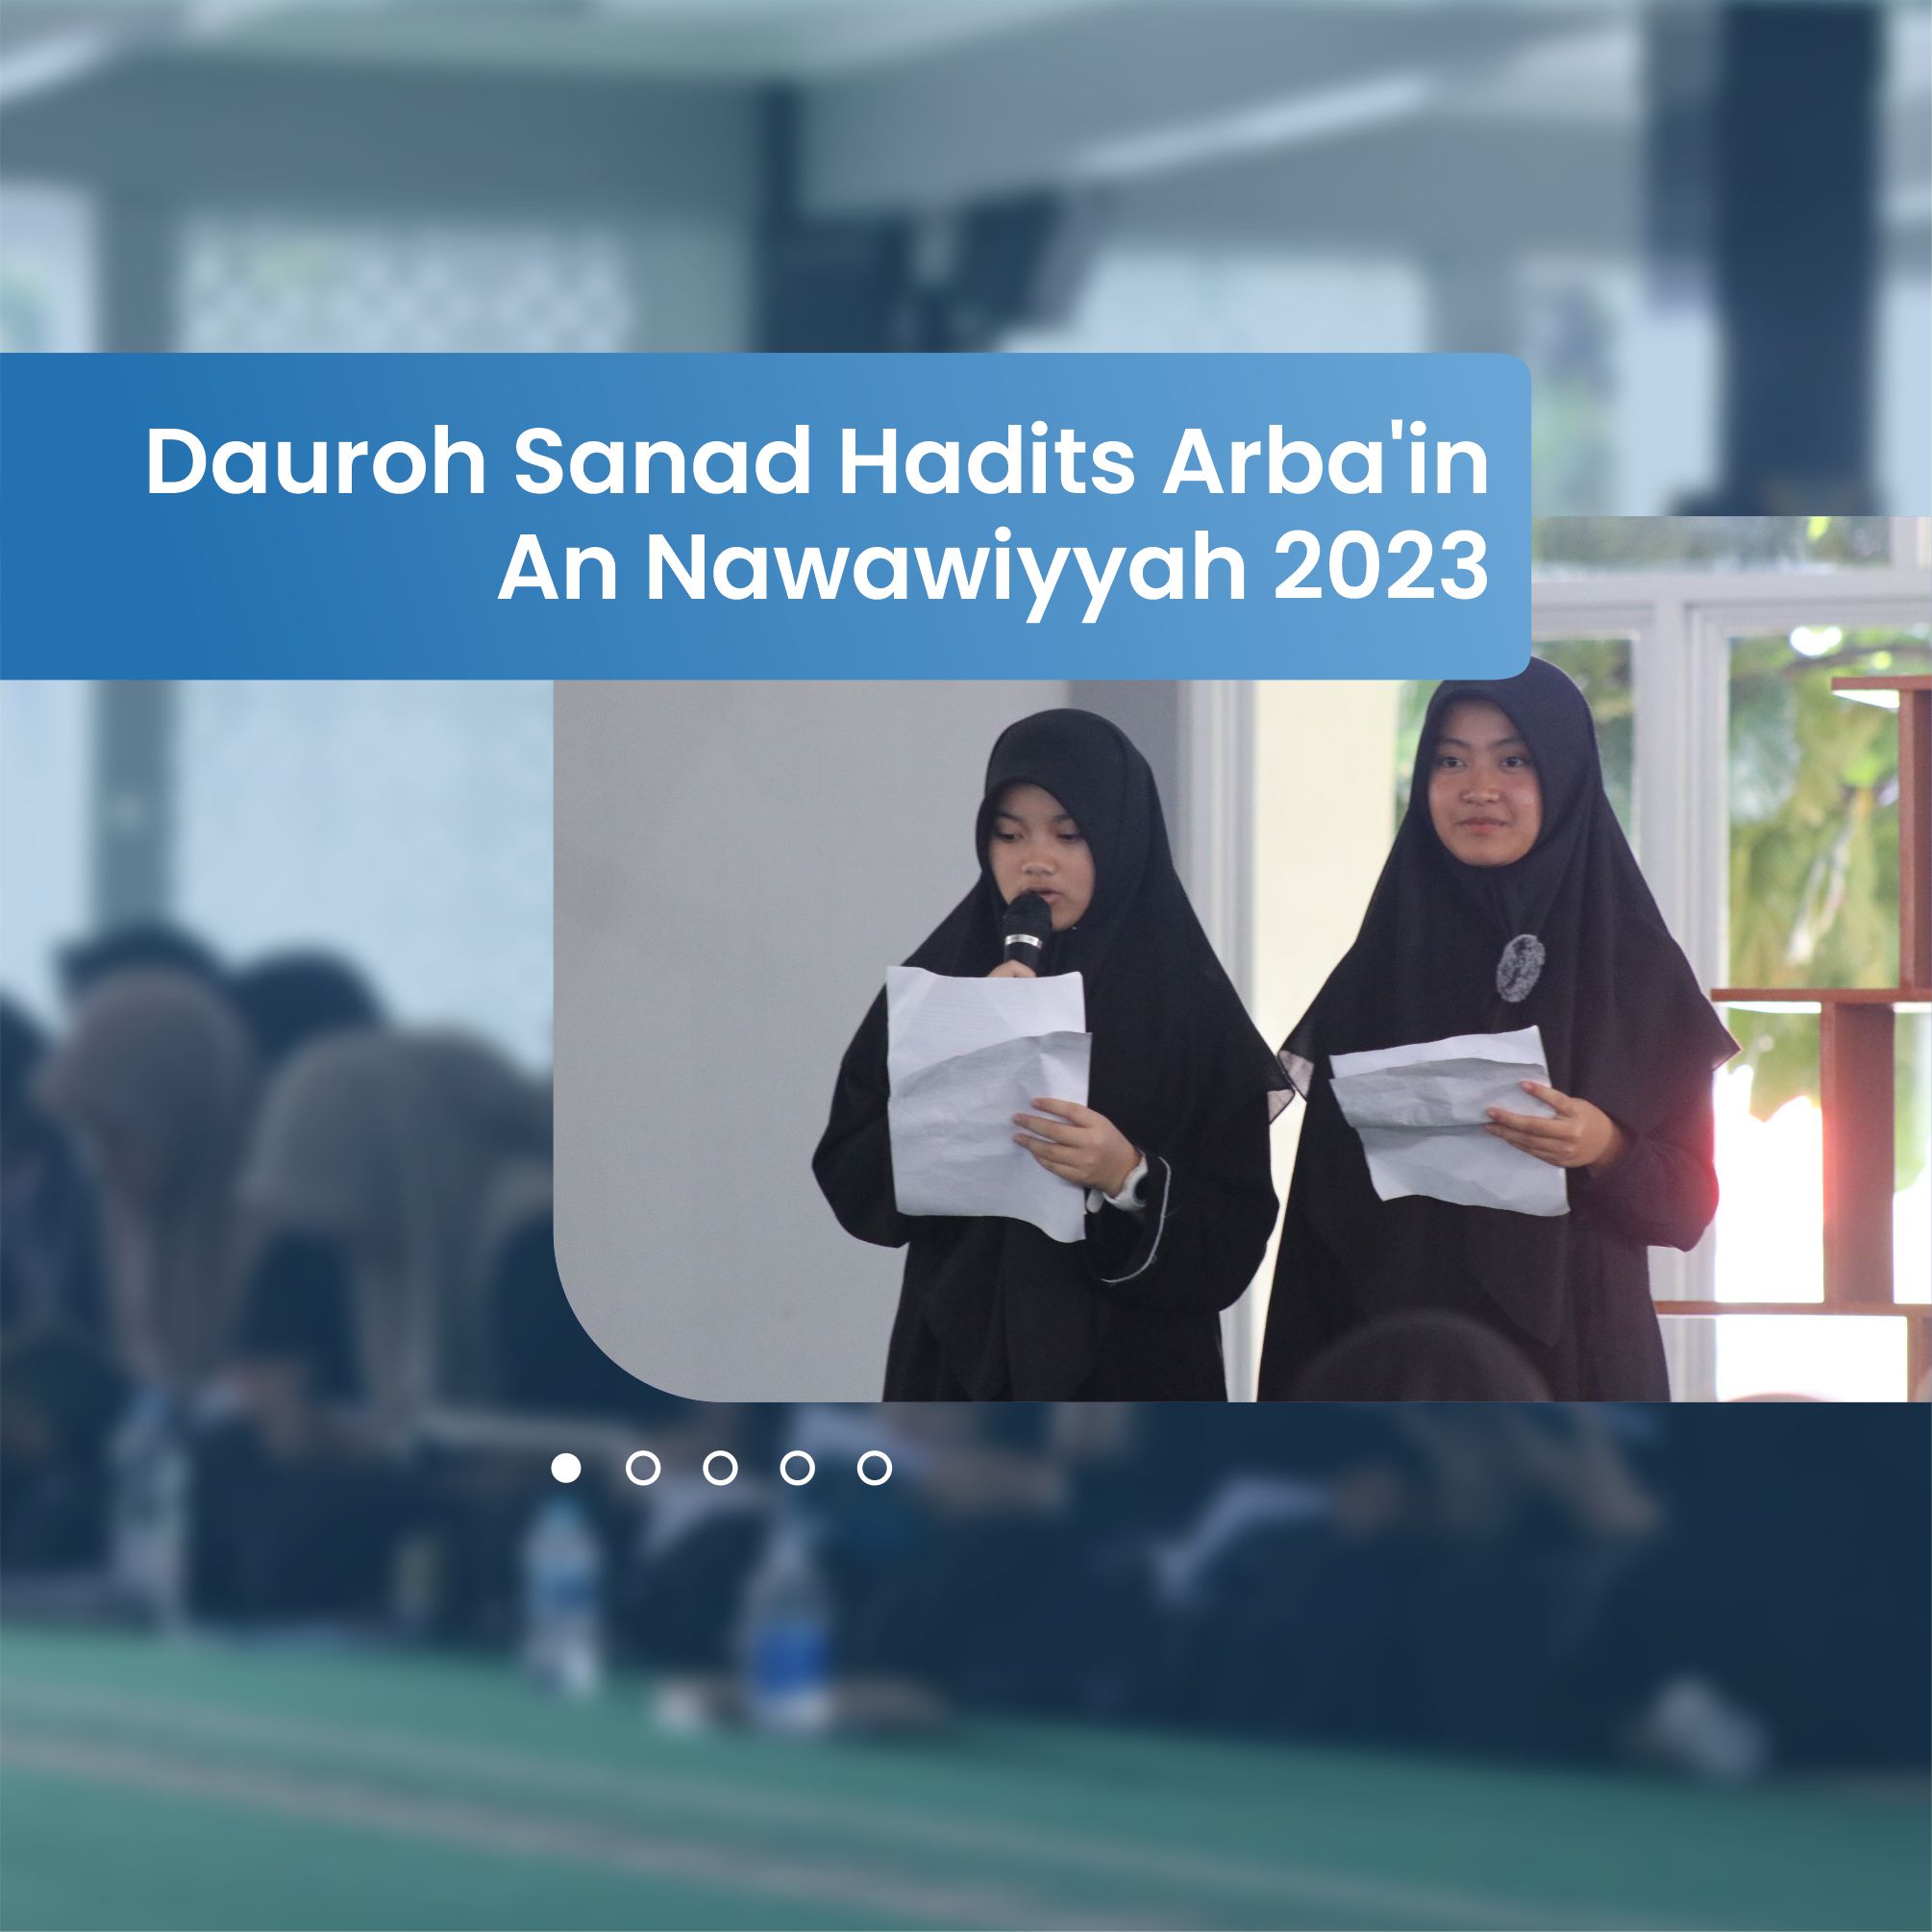 Dauroh Sanad Hadits Arba’in An Nawawiyyah 2023